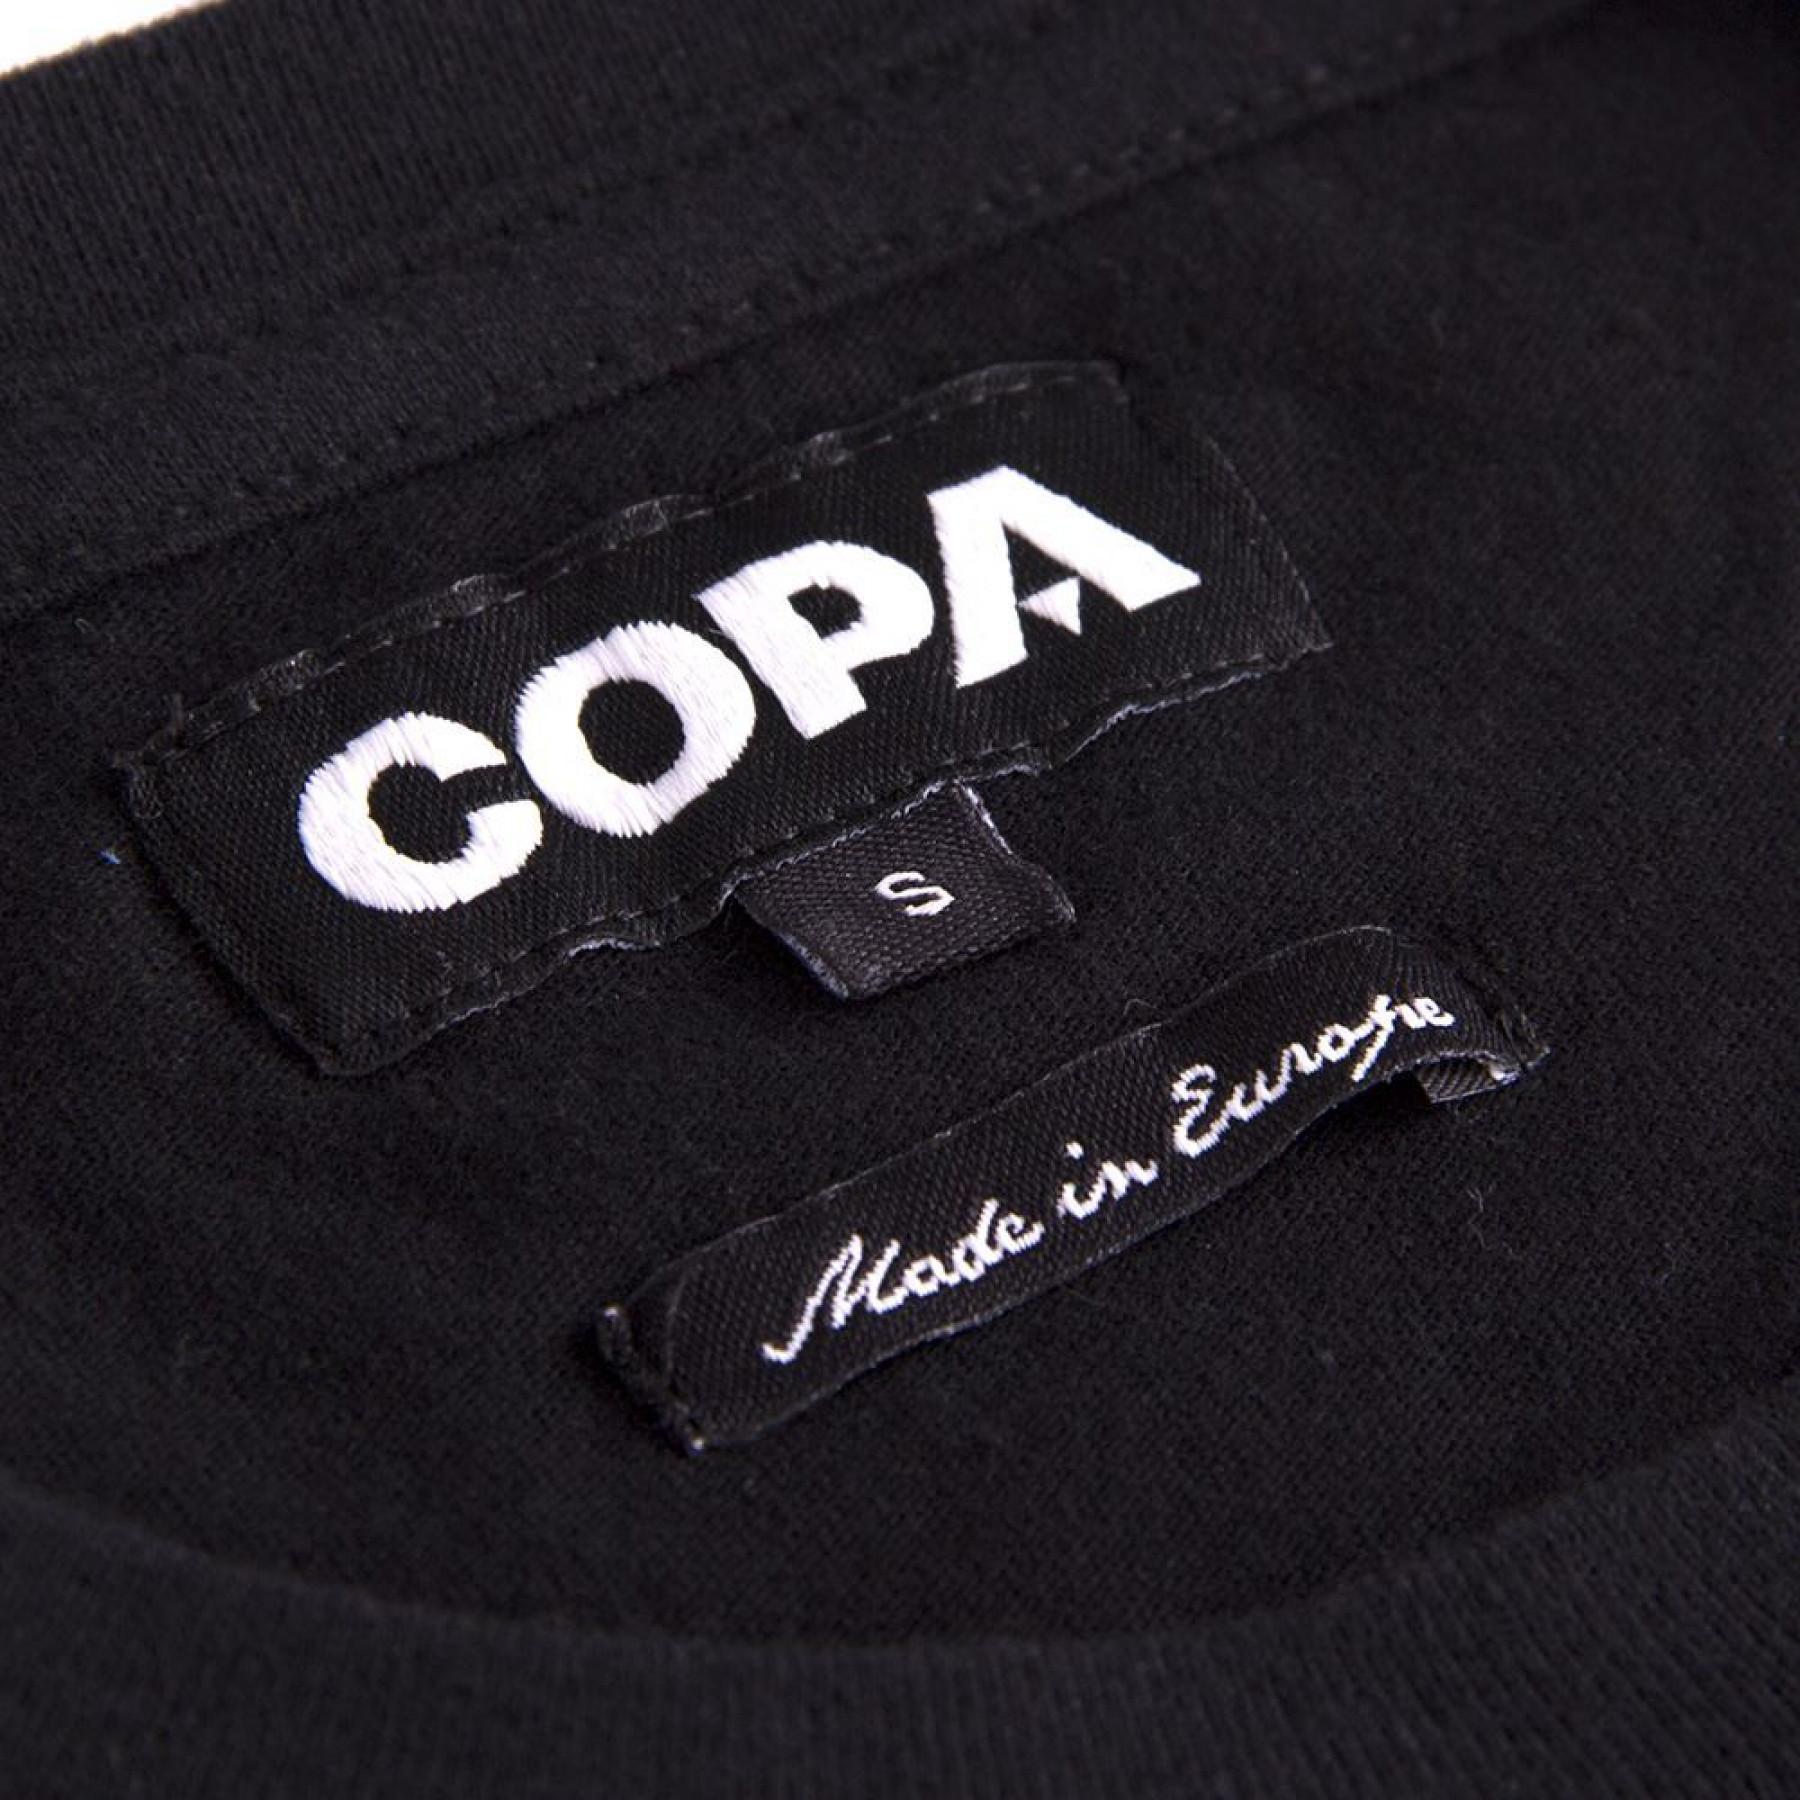 T-shirt Copa Football Box Logo